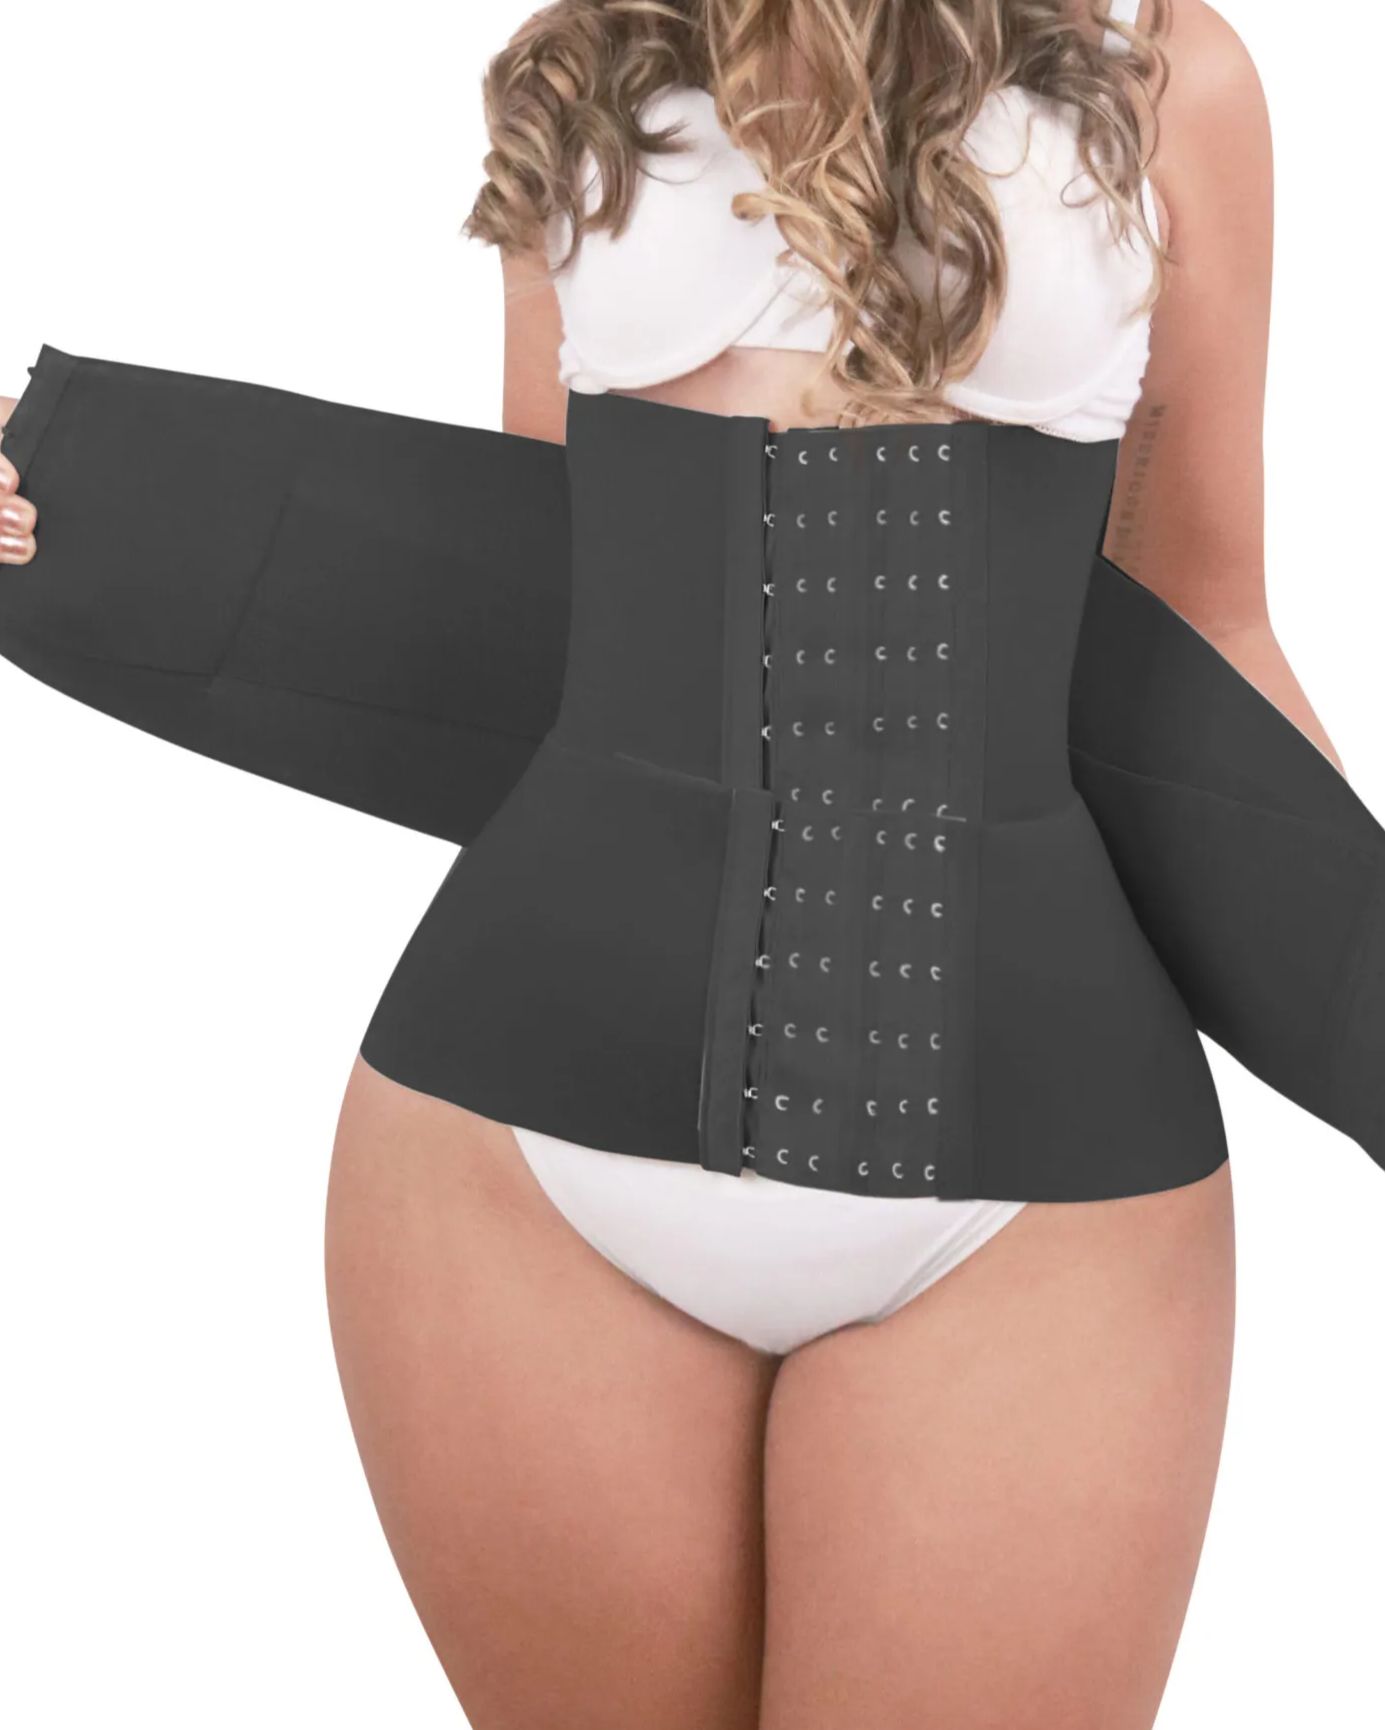 Flangesio Fajas Reductoras Body Shaper Women Slimming Lifter Shapewear Plus  Size Waist Trainer Corset Seamless Thigh Trimmer Tummy